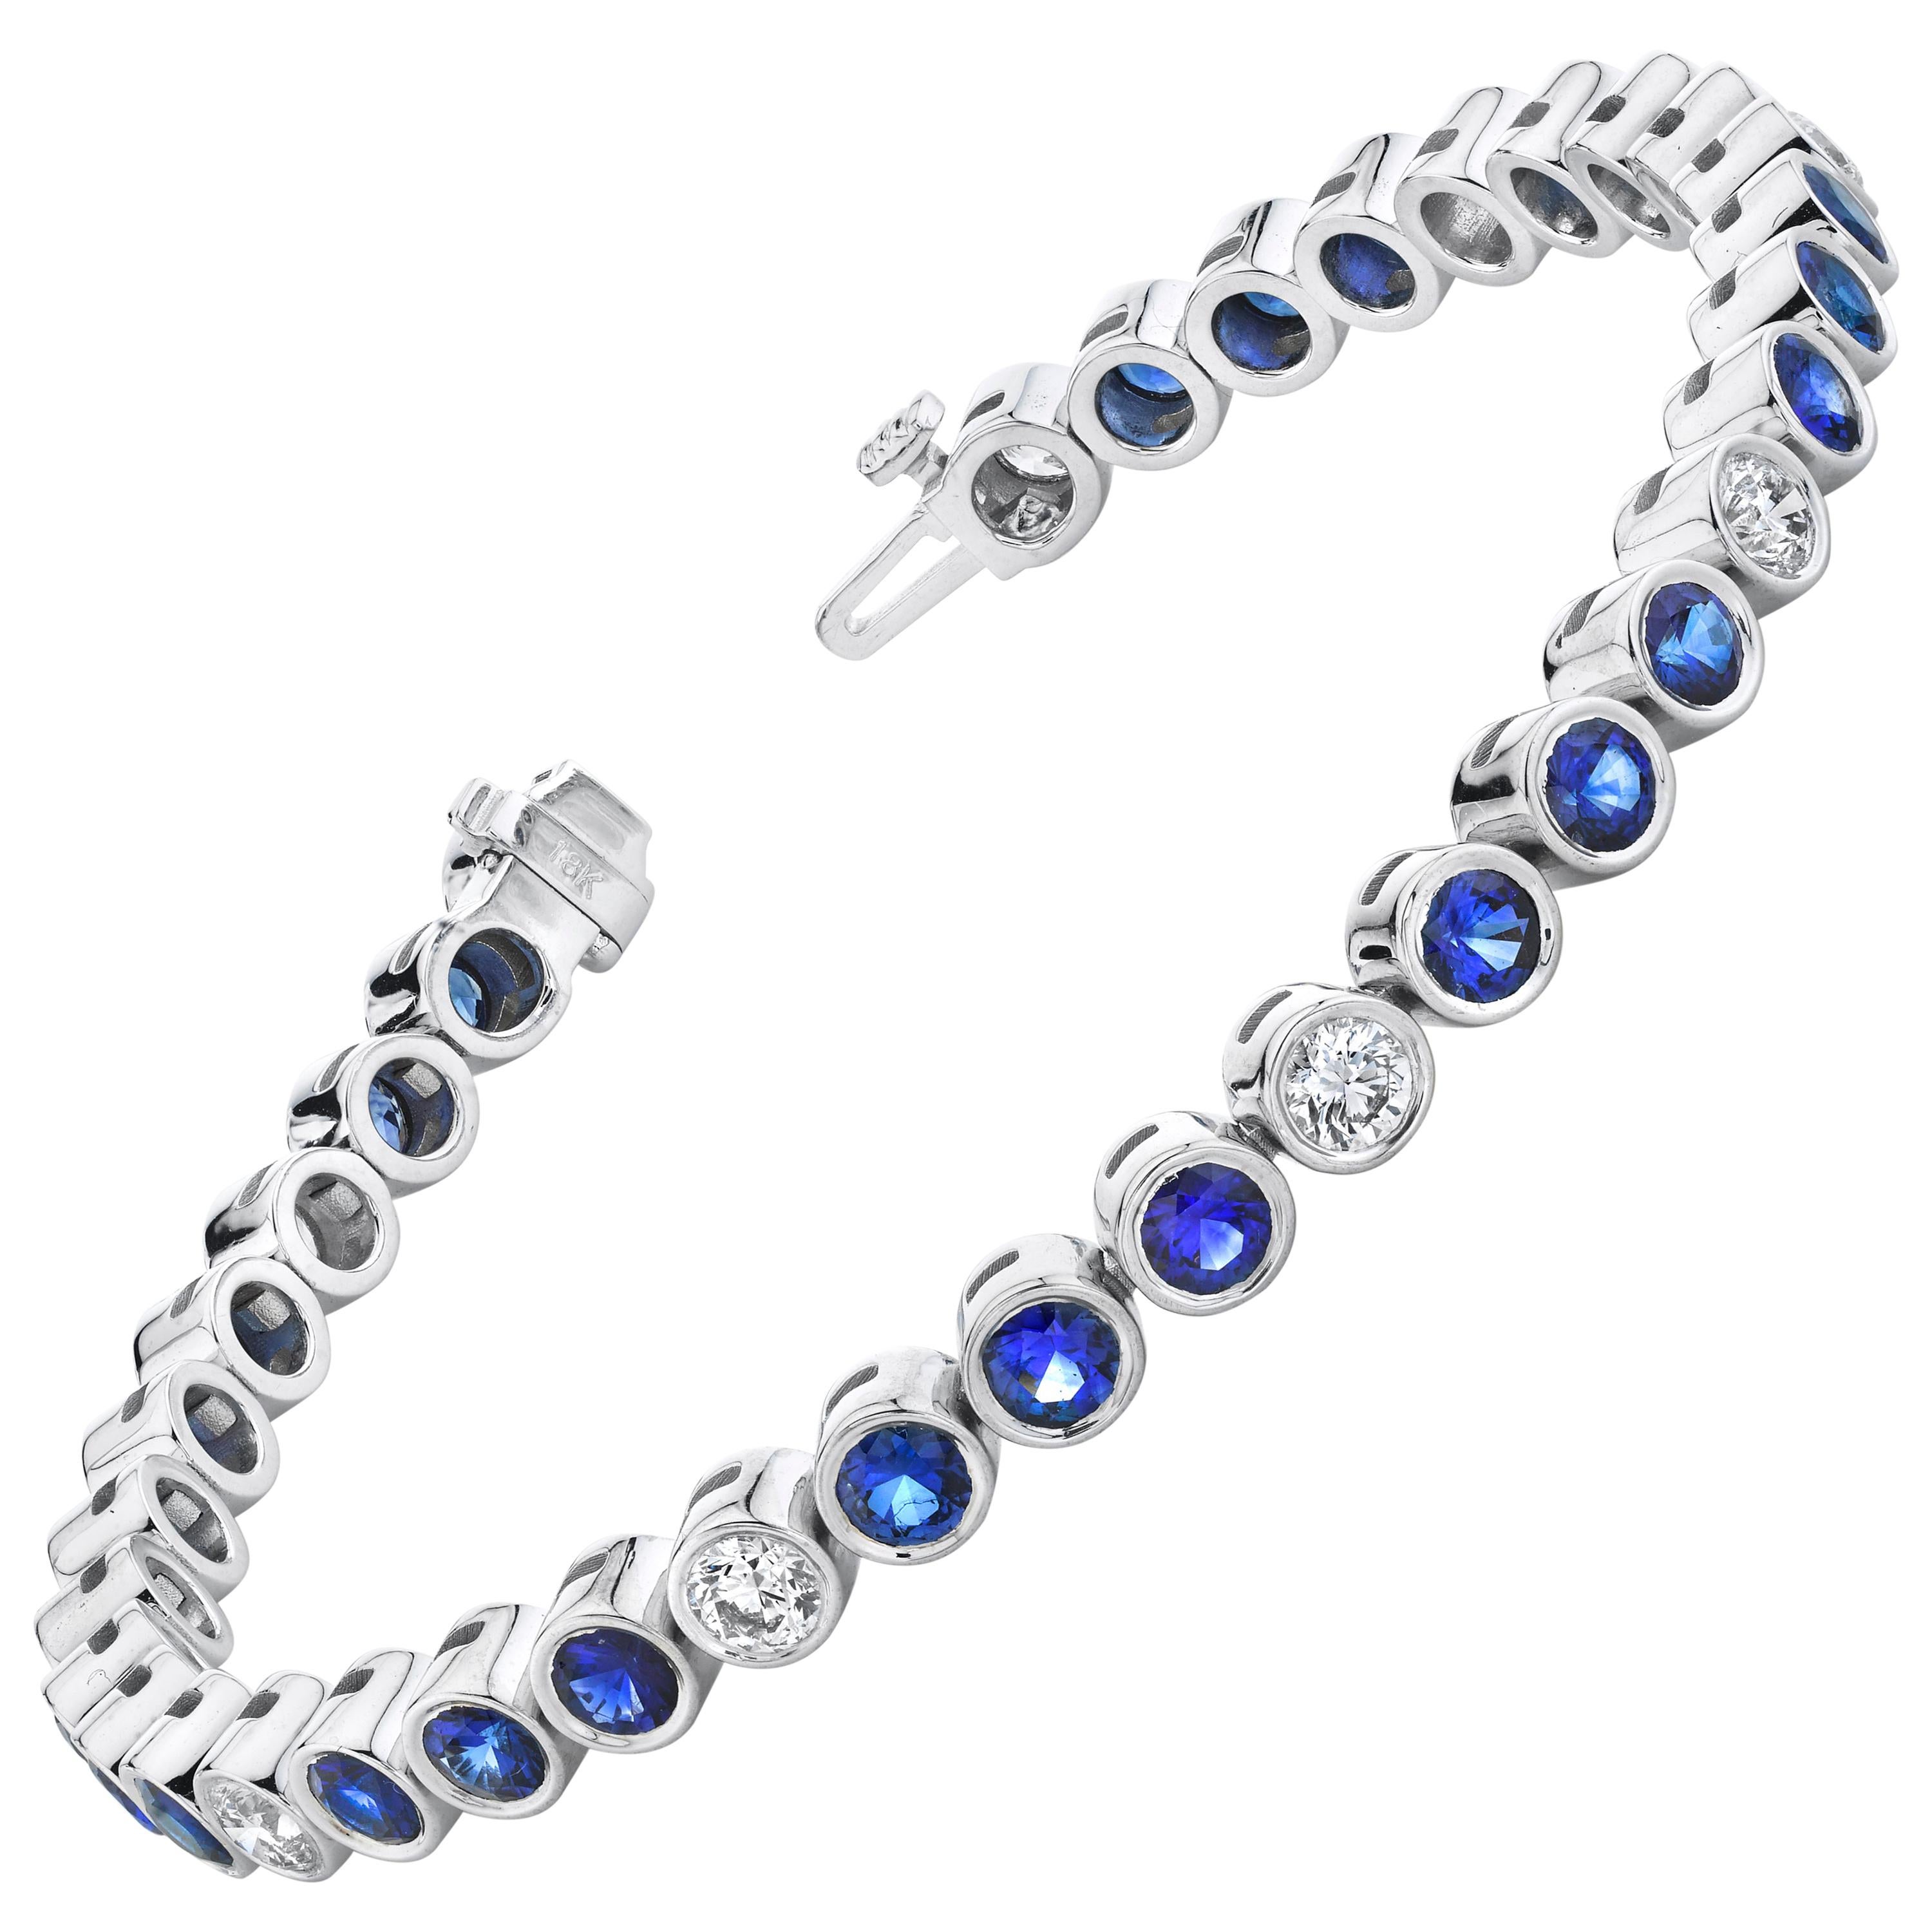 6.42 Carat Total Blue Sapphire and Diamond, White Gold Bezel Set Tennis Bracelet